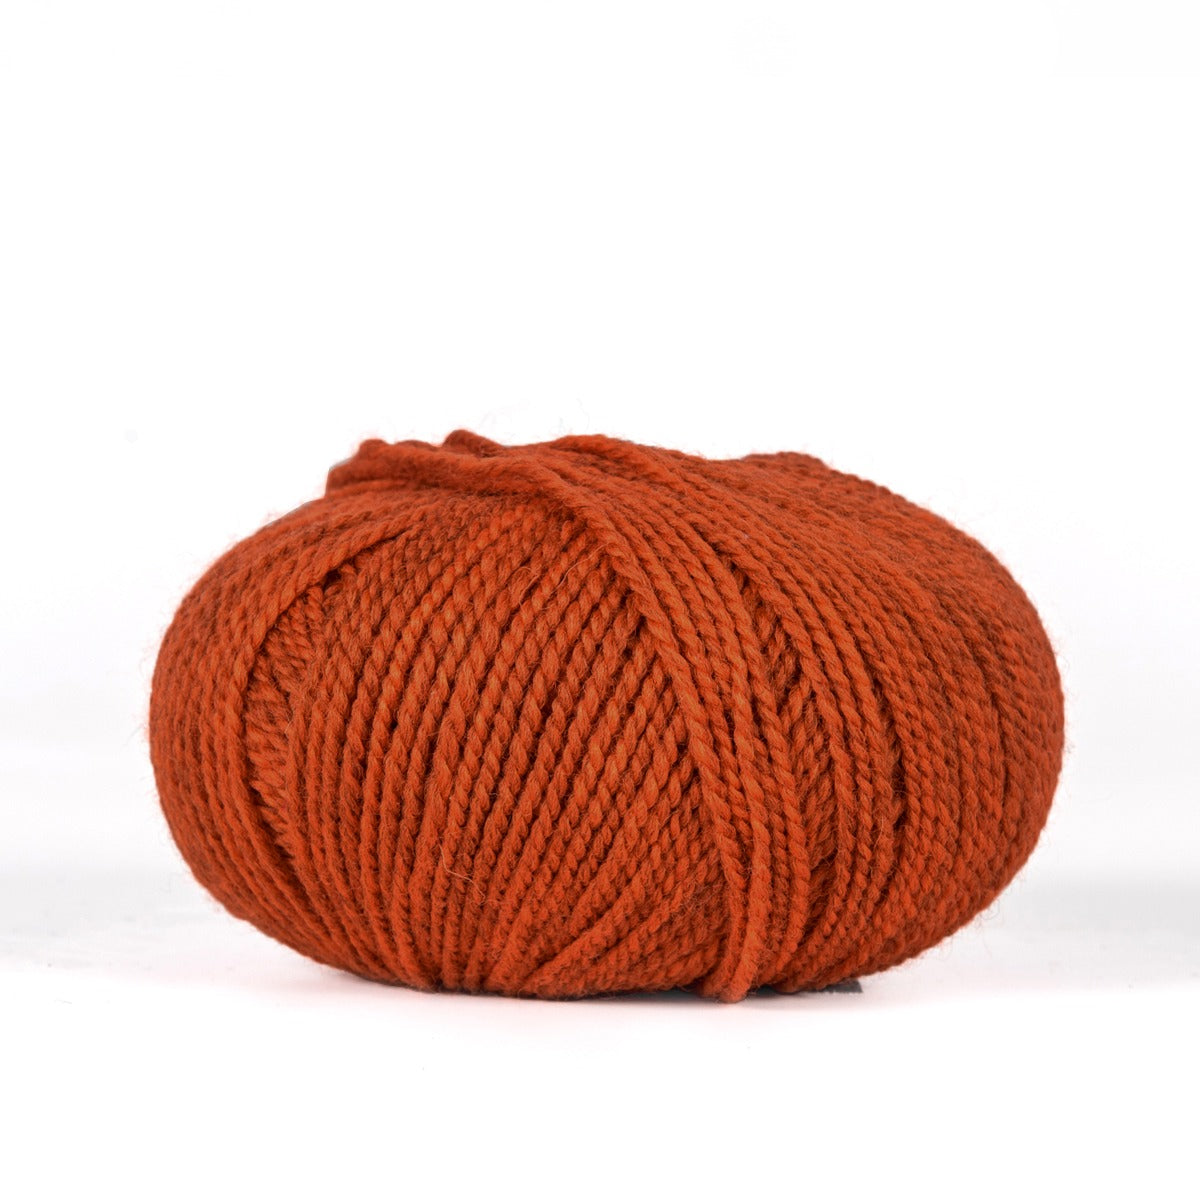 BC Garn Yarn 011 Burnt Orange Semilla